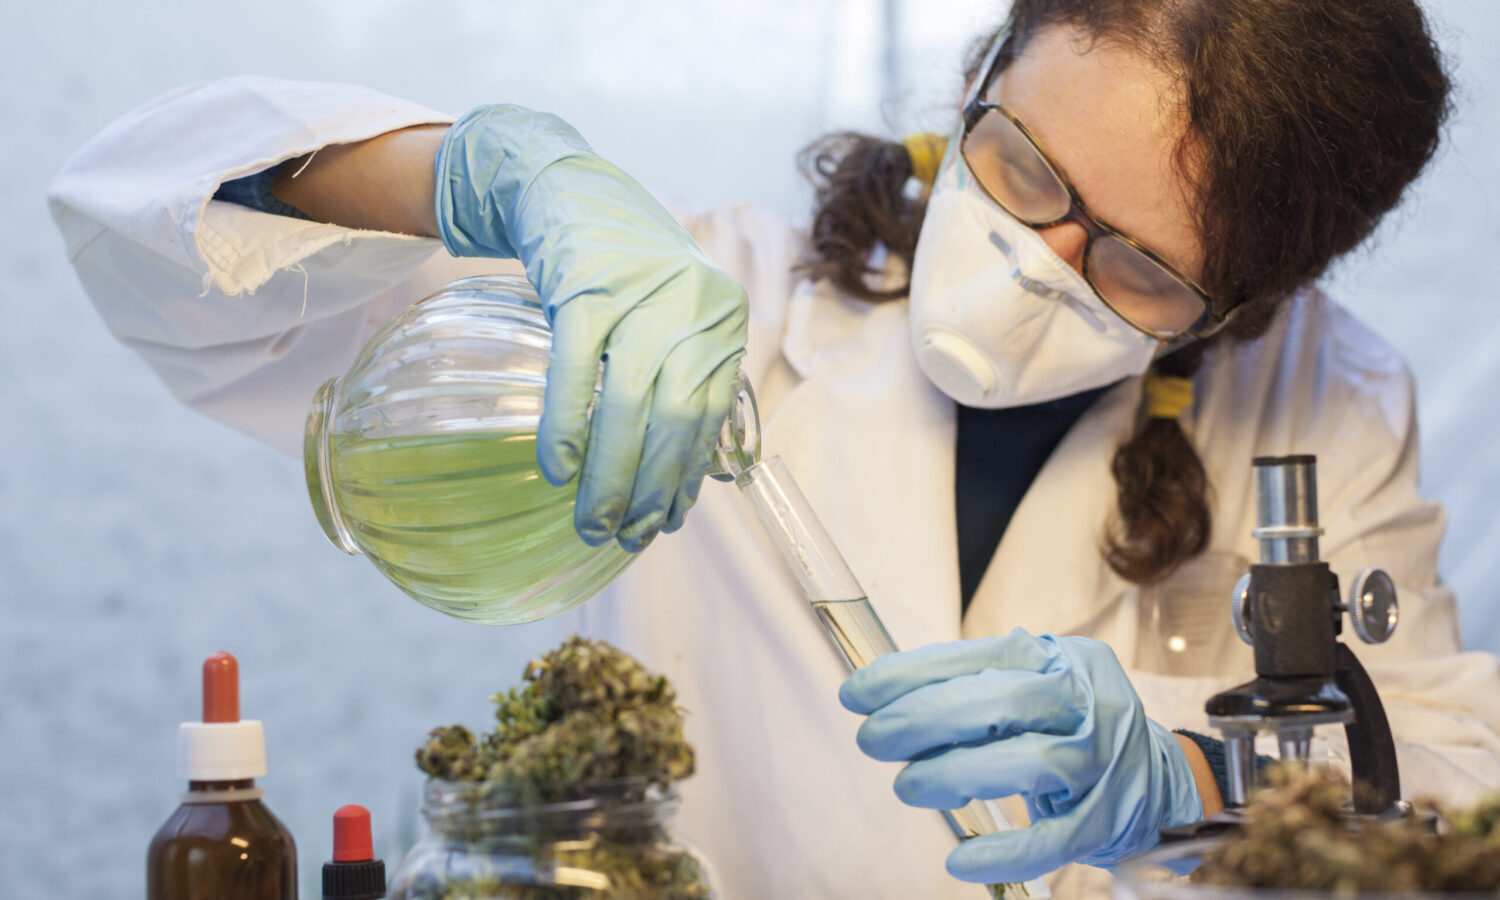 Award Winning Researcher Engineers Cannabis Strain With 20% THC